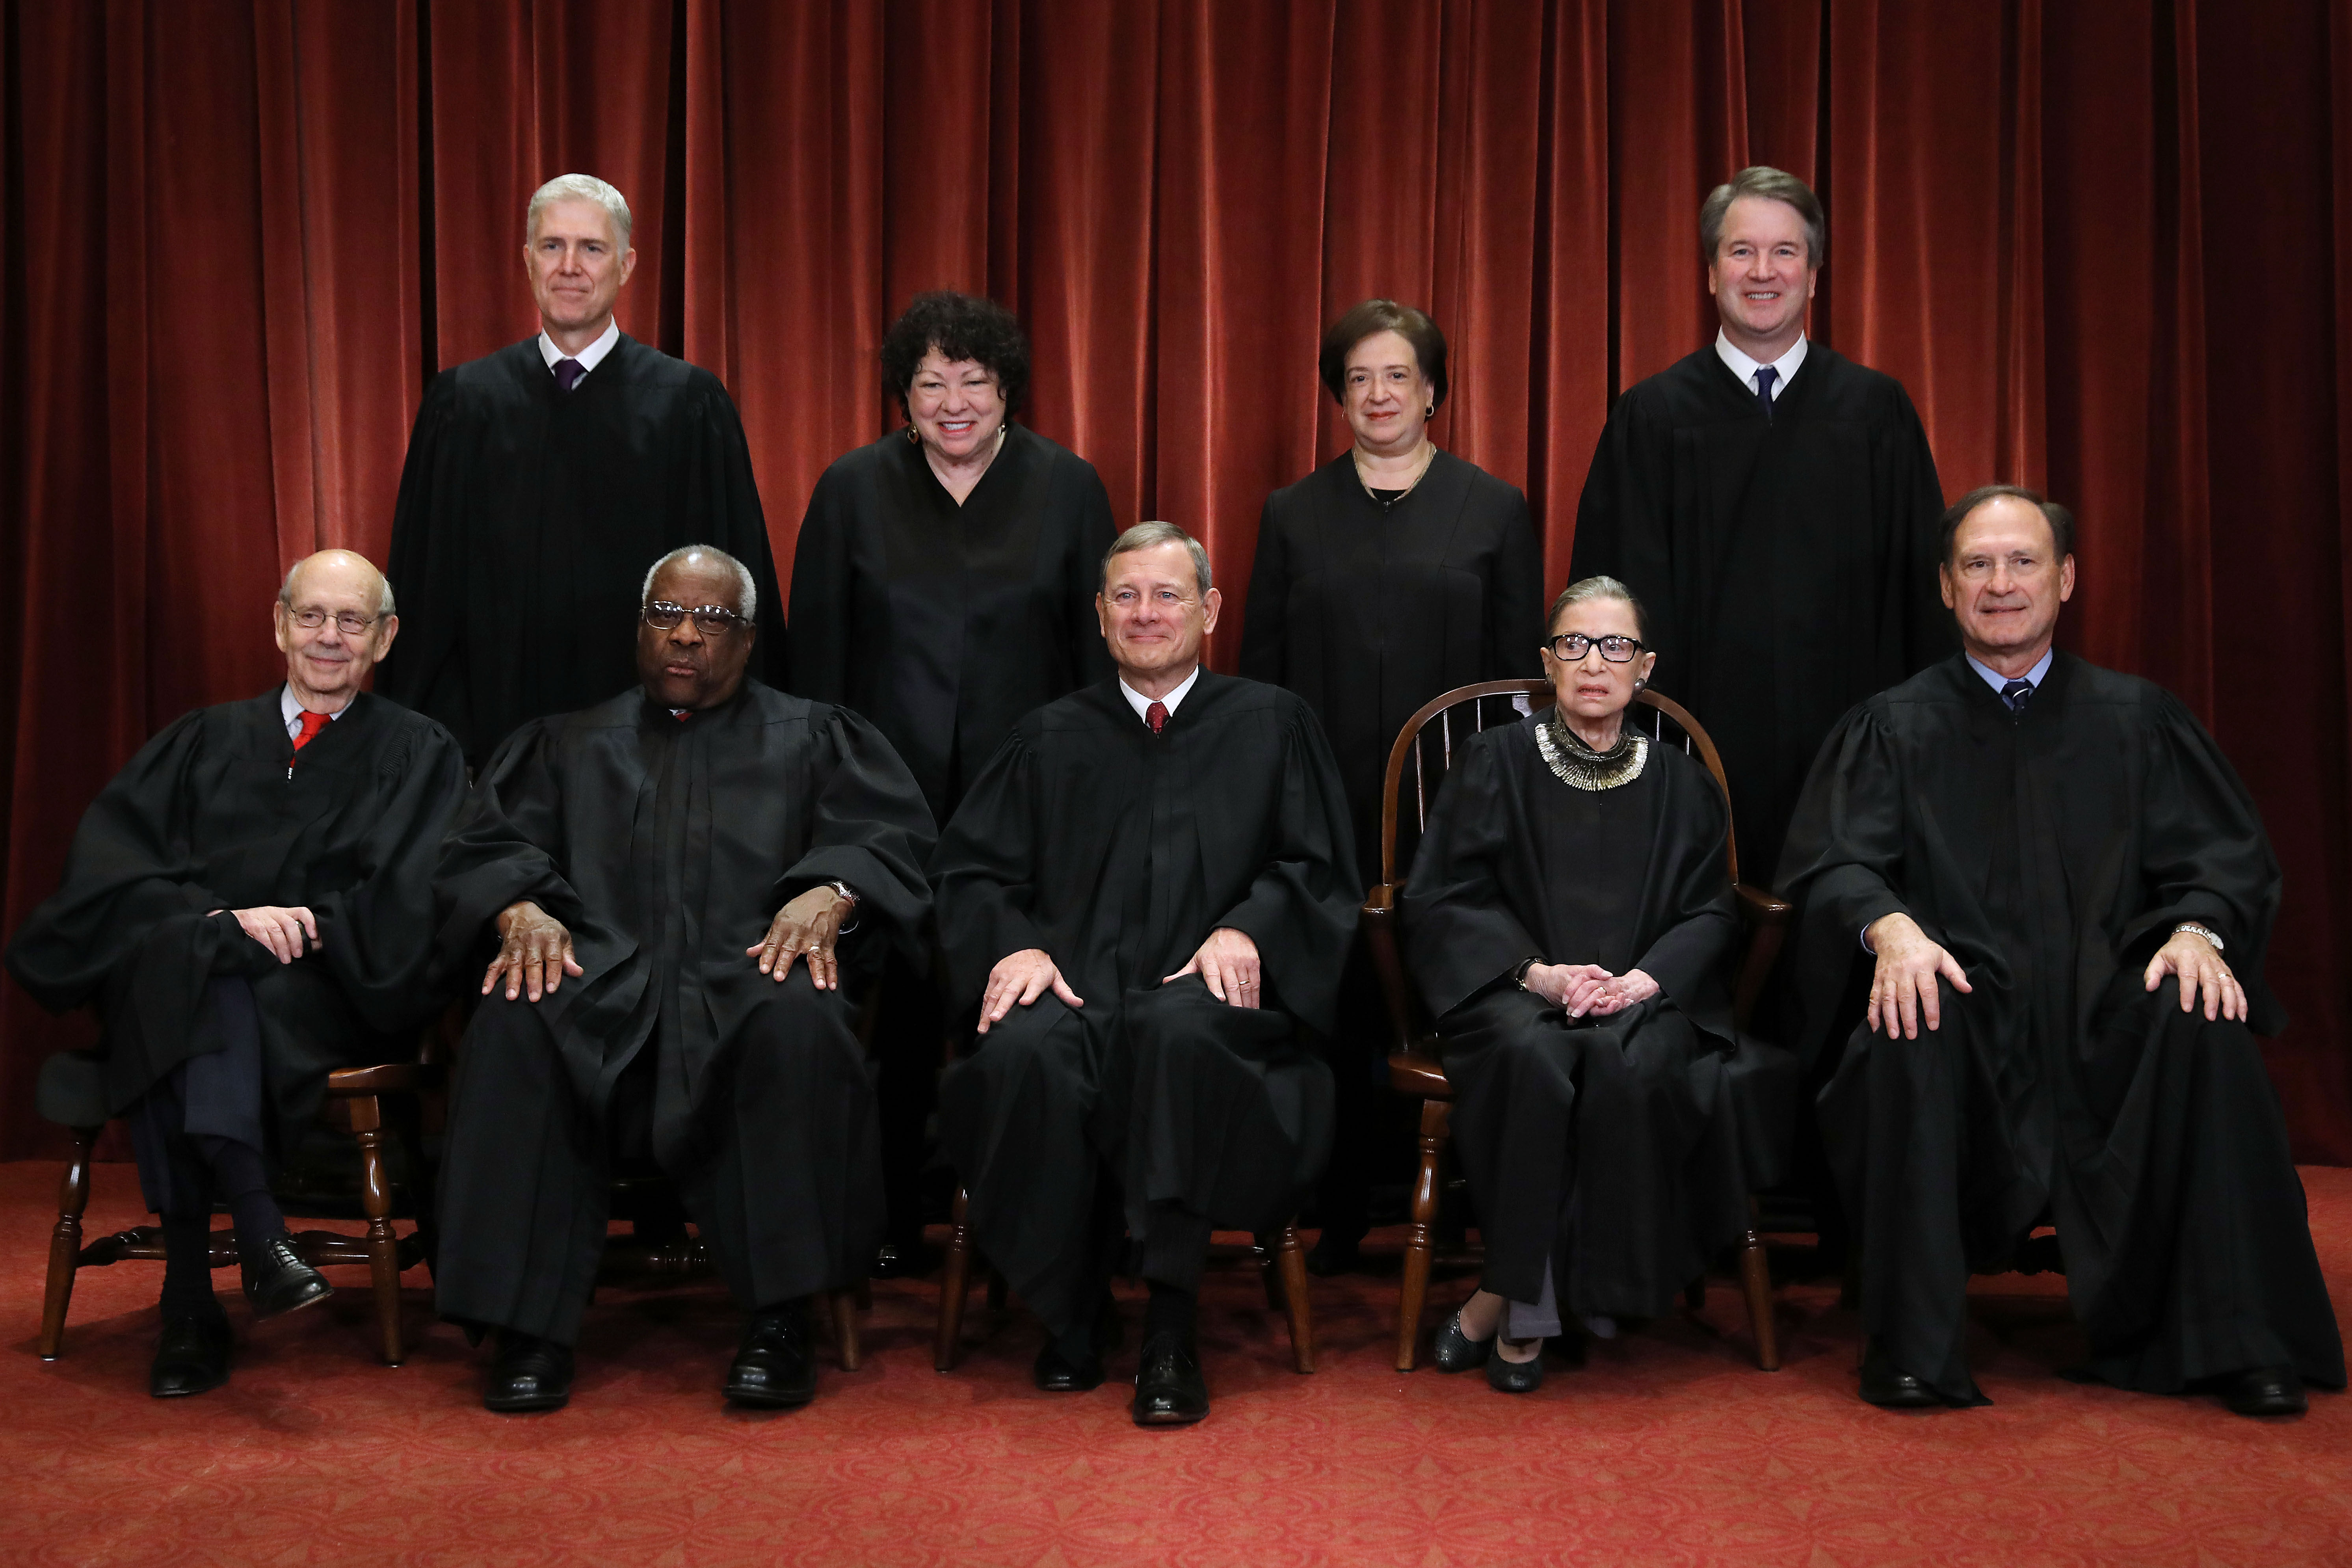 U.S. Supreme Court Justices Pose For Official Group Portrait